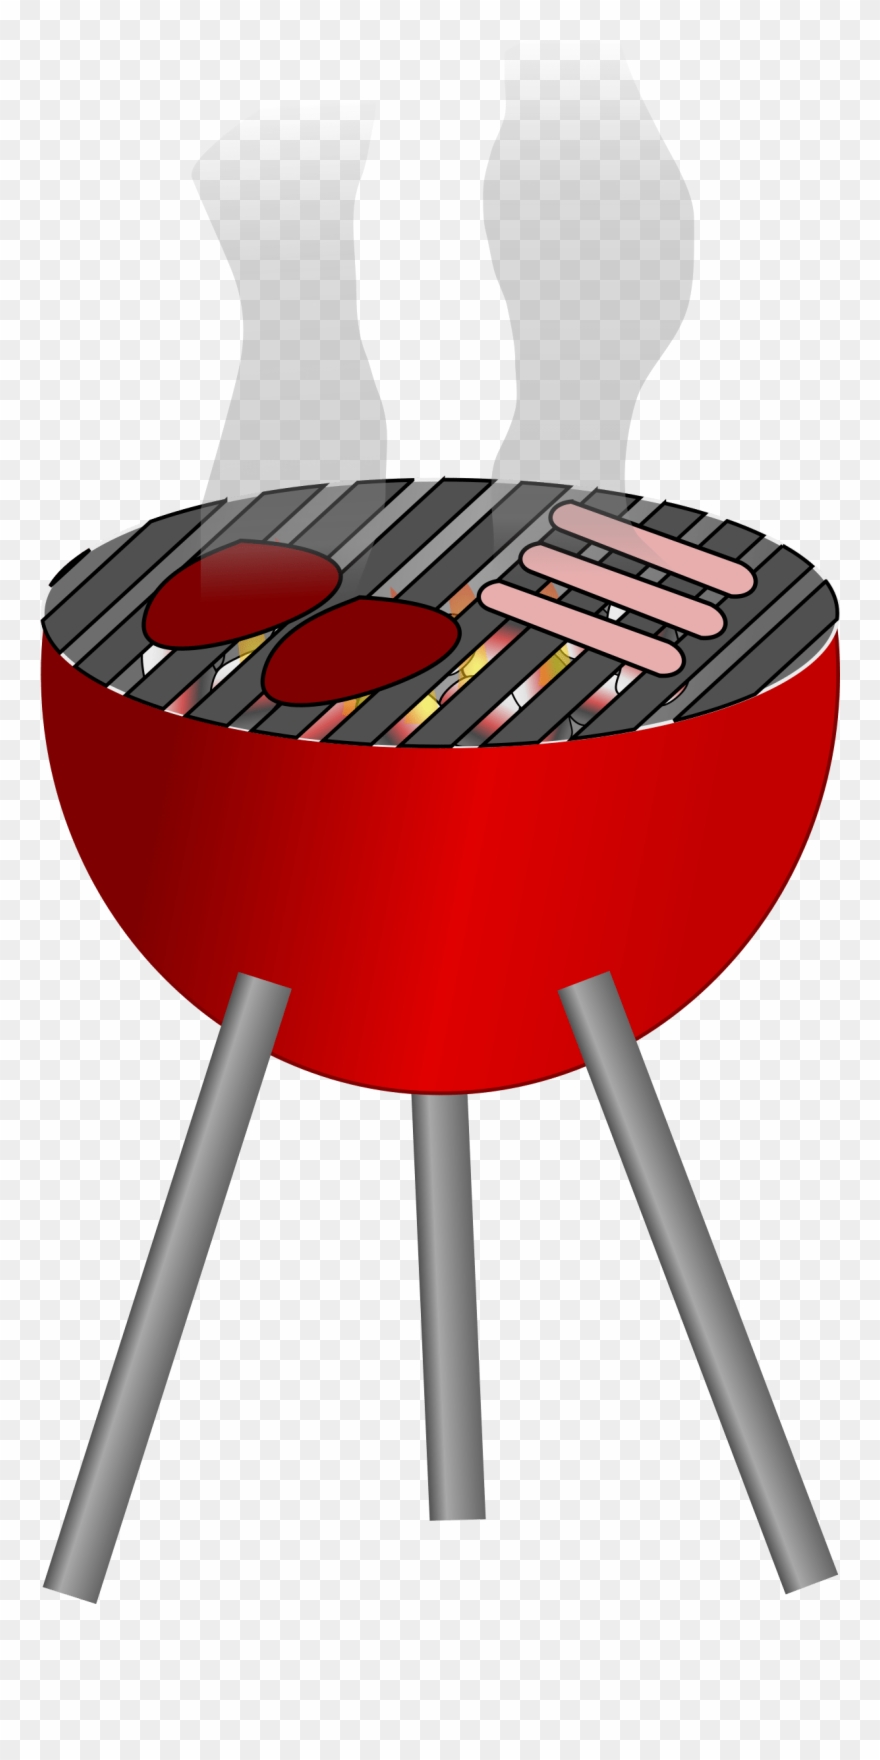 grilling clipart grillclip